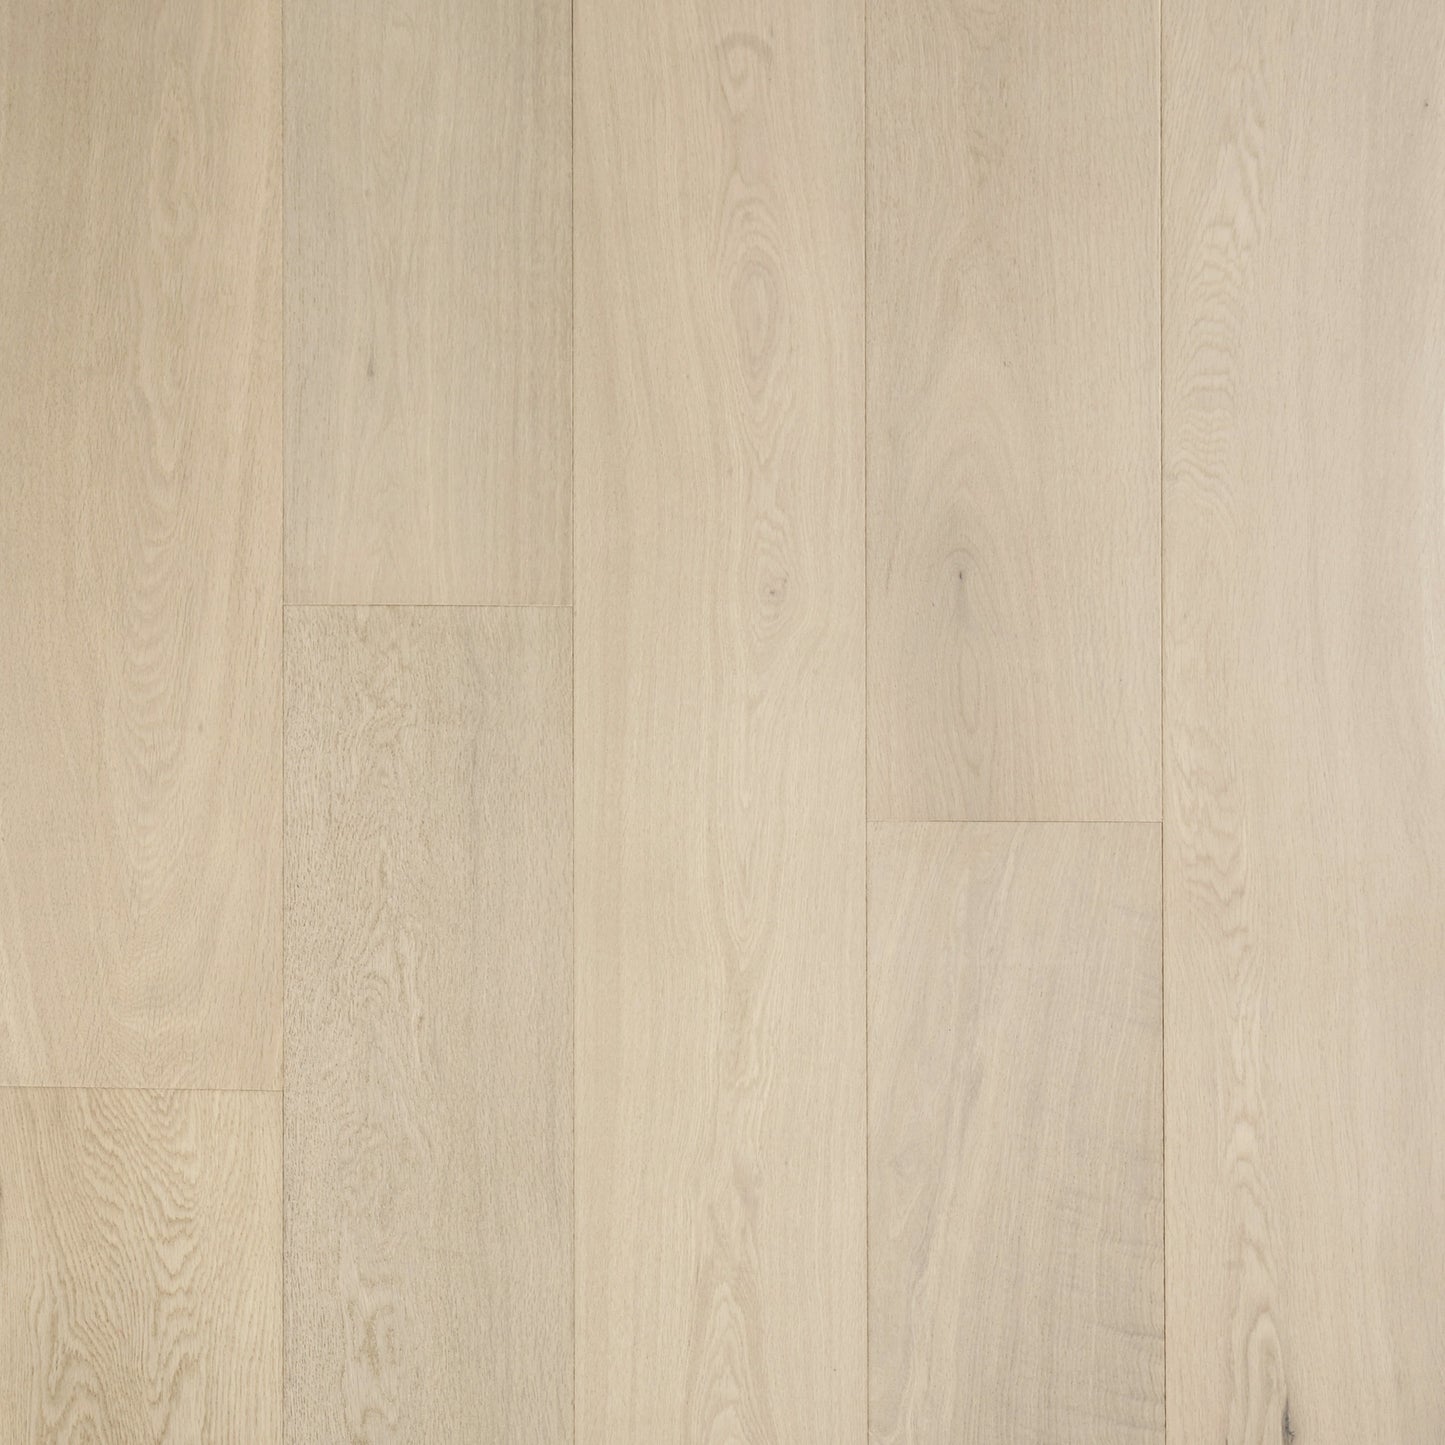 Polaris White European Oak 5/8″T x 7.5"W Engineered Hardwood Flooring(31.58sq.ft/case)